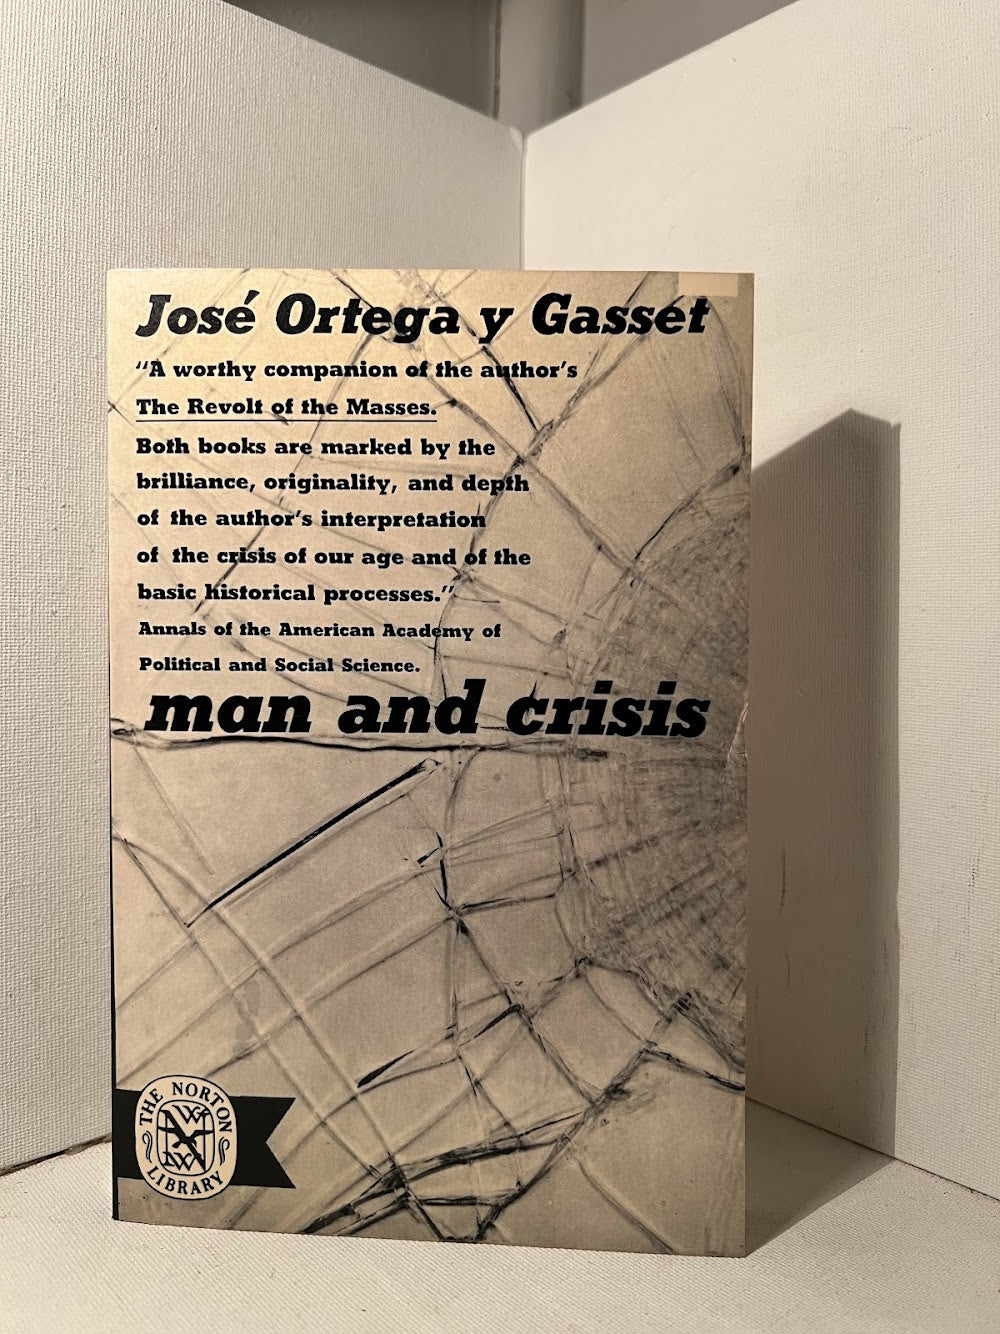 Man and Crisis by Jose Ortega y Gasset